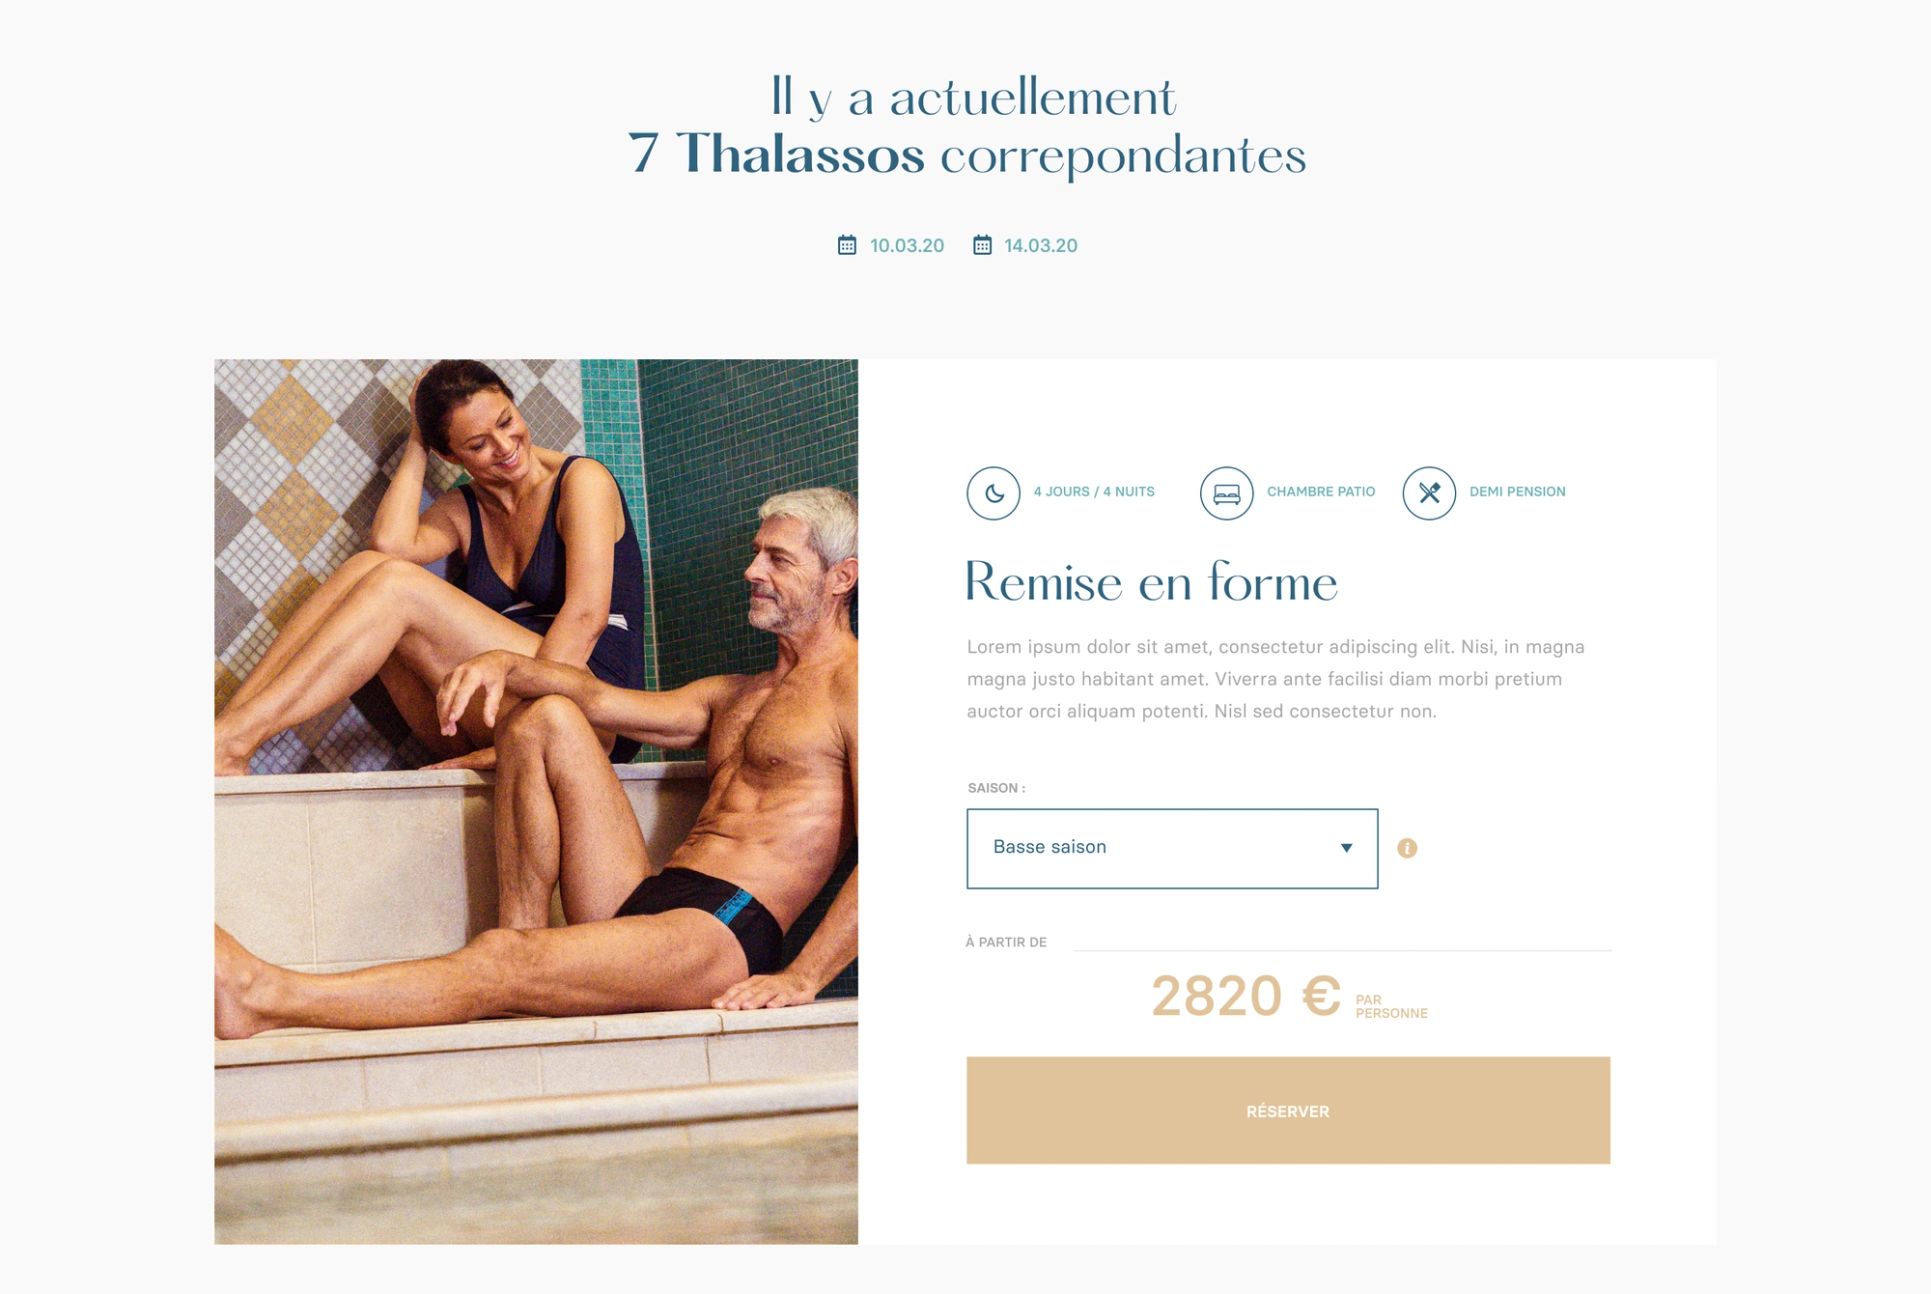 Alliance Pornic image fullscreen website e-commerce desktop slider special deals offers